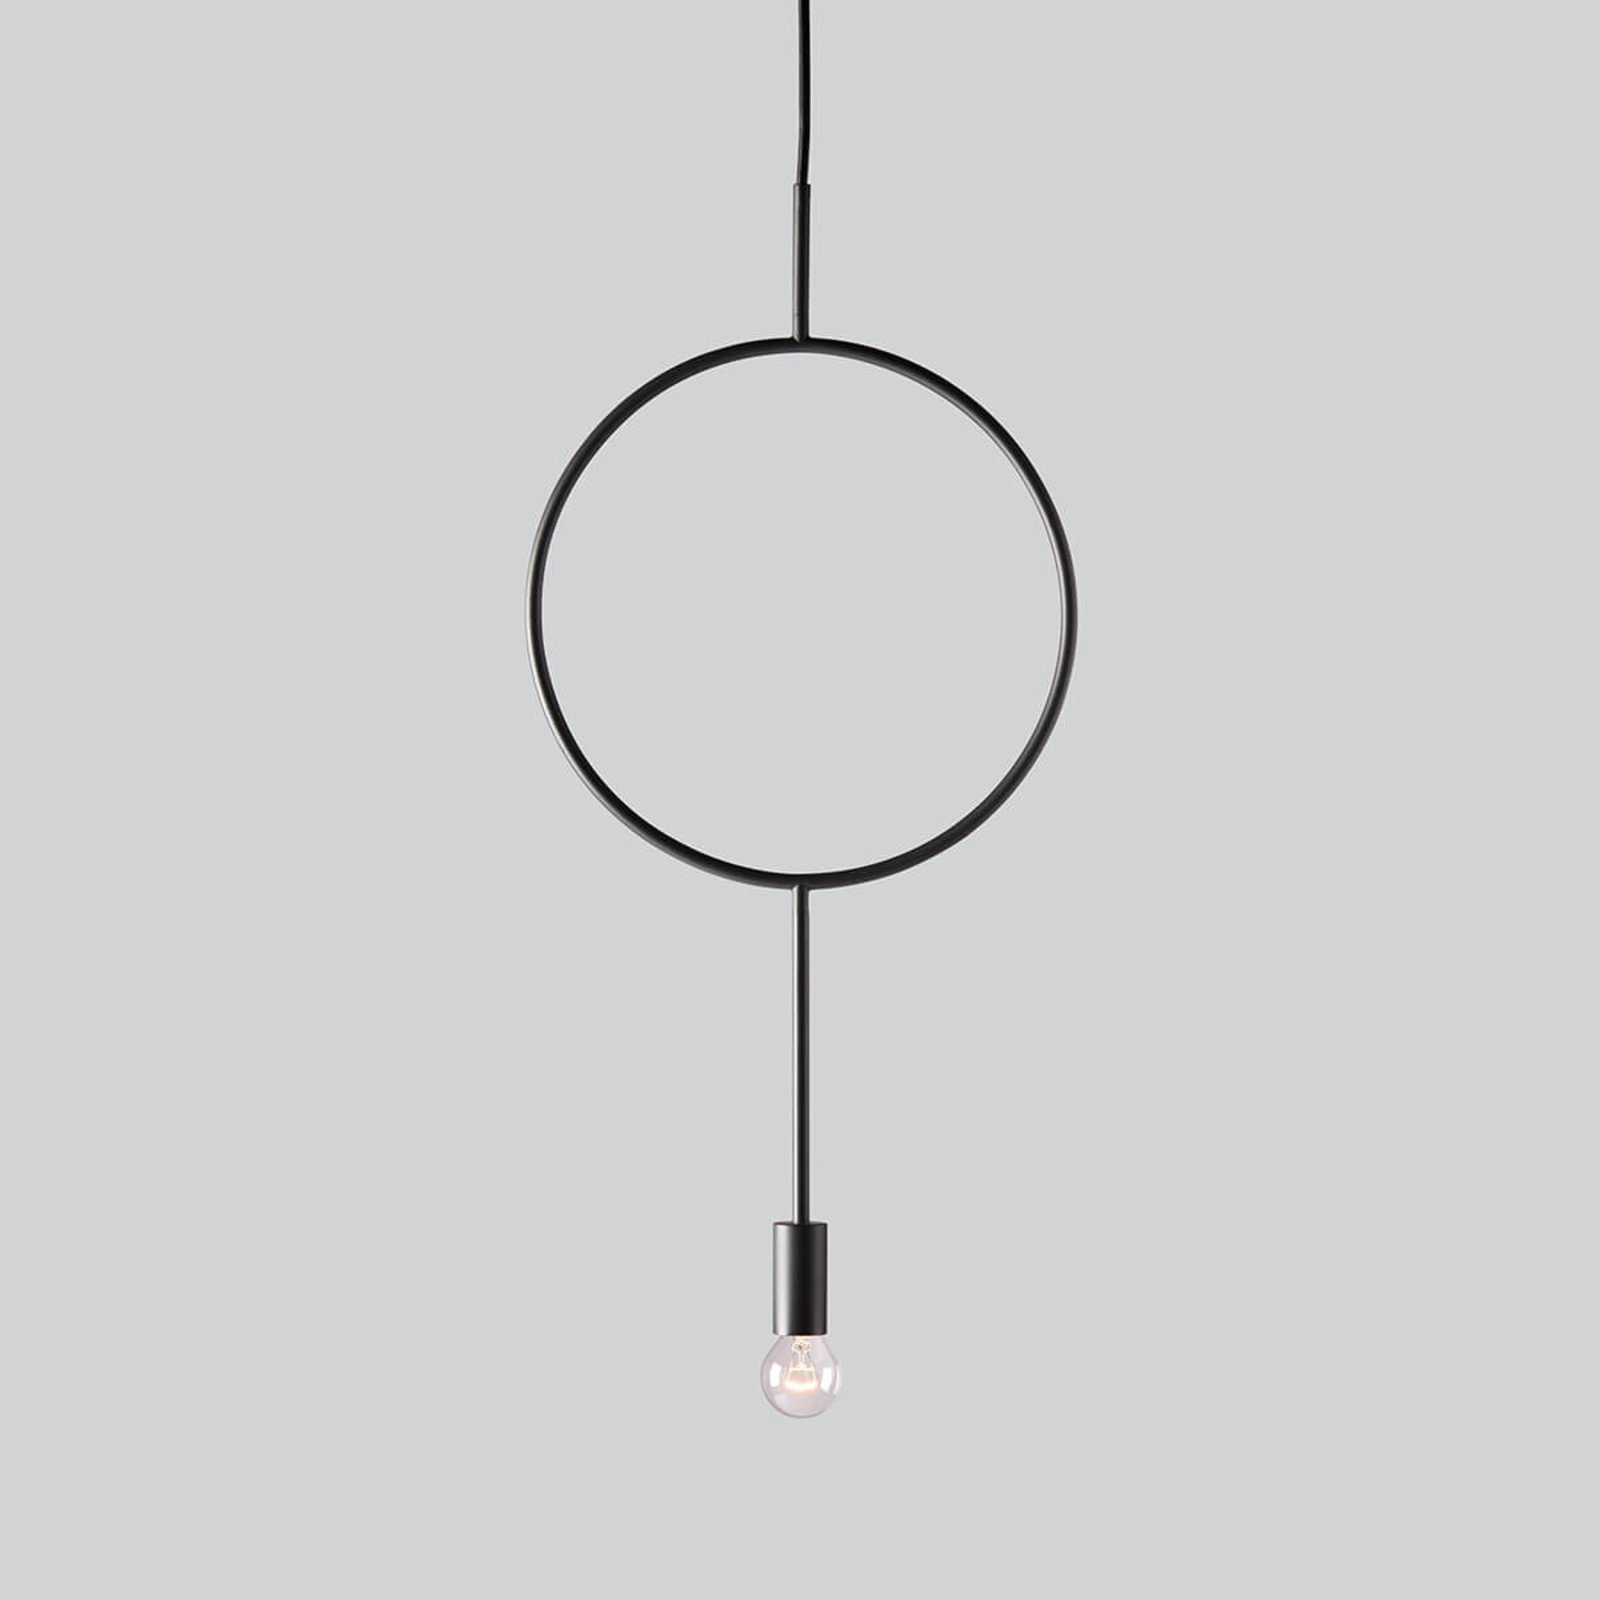 Originale lampada a sospensione di design Circle